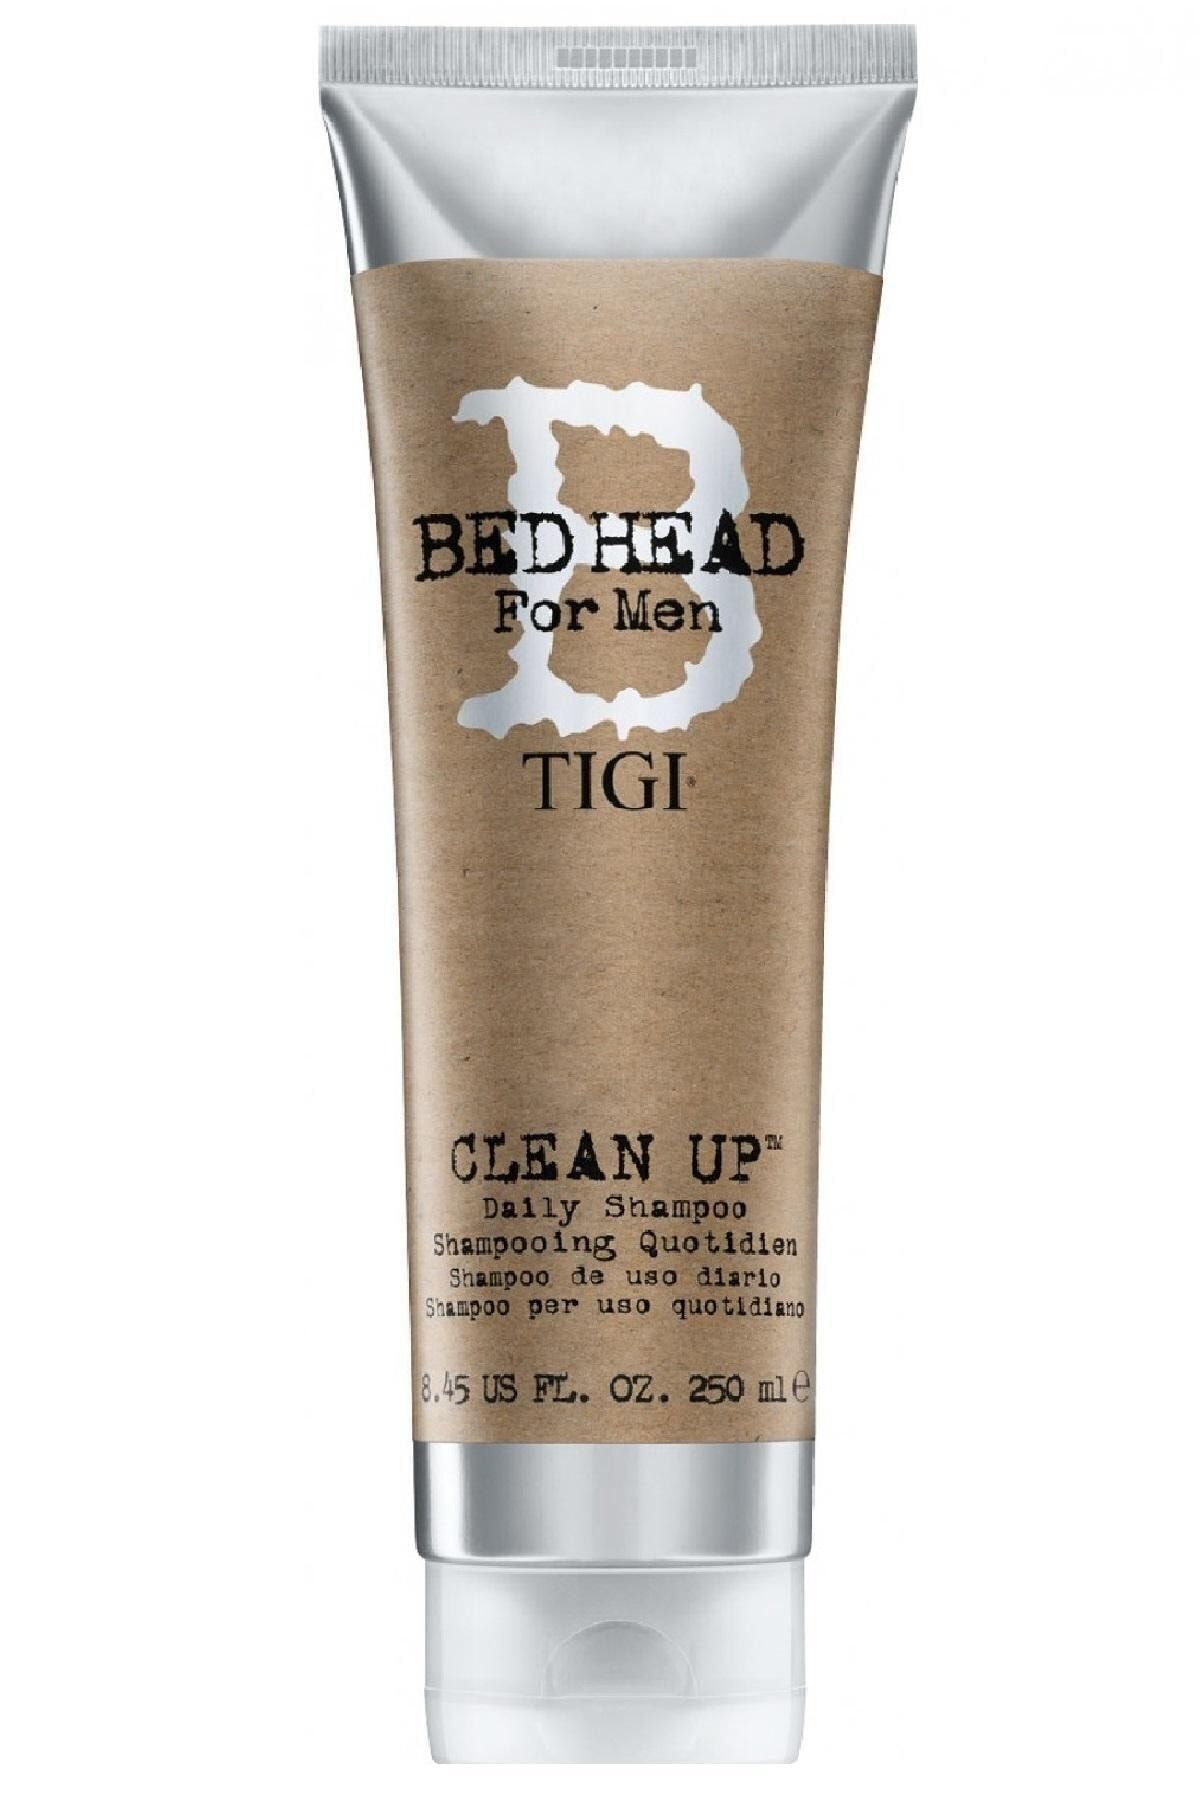 Tigi Bed Head شامپو روزانه مردانه Bed Head Clean Up پاکسازی عمیق مو 250 میل